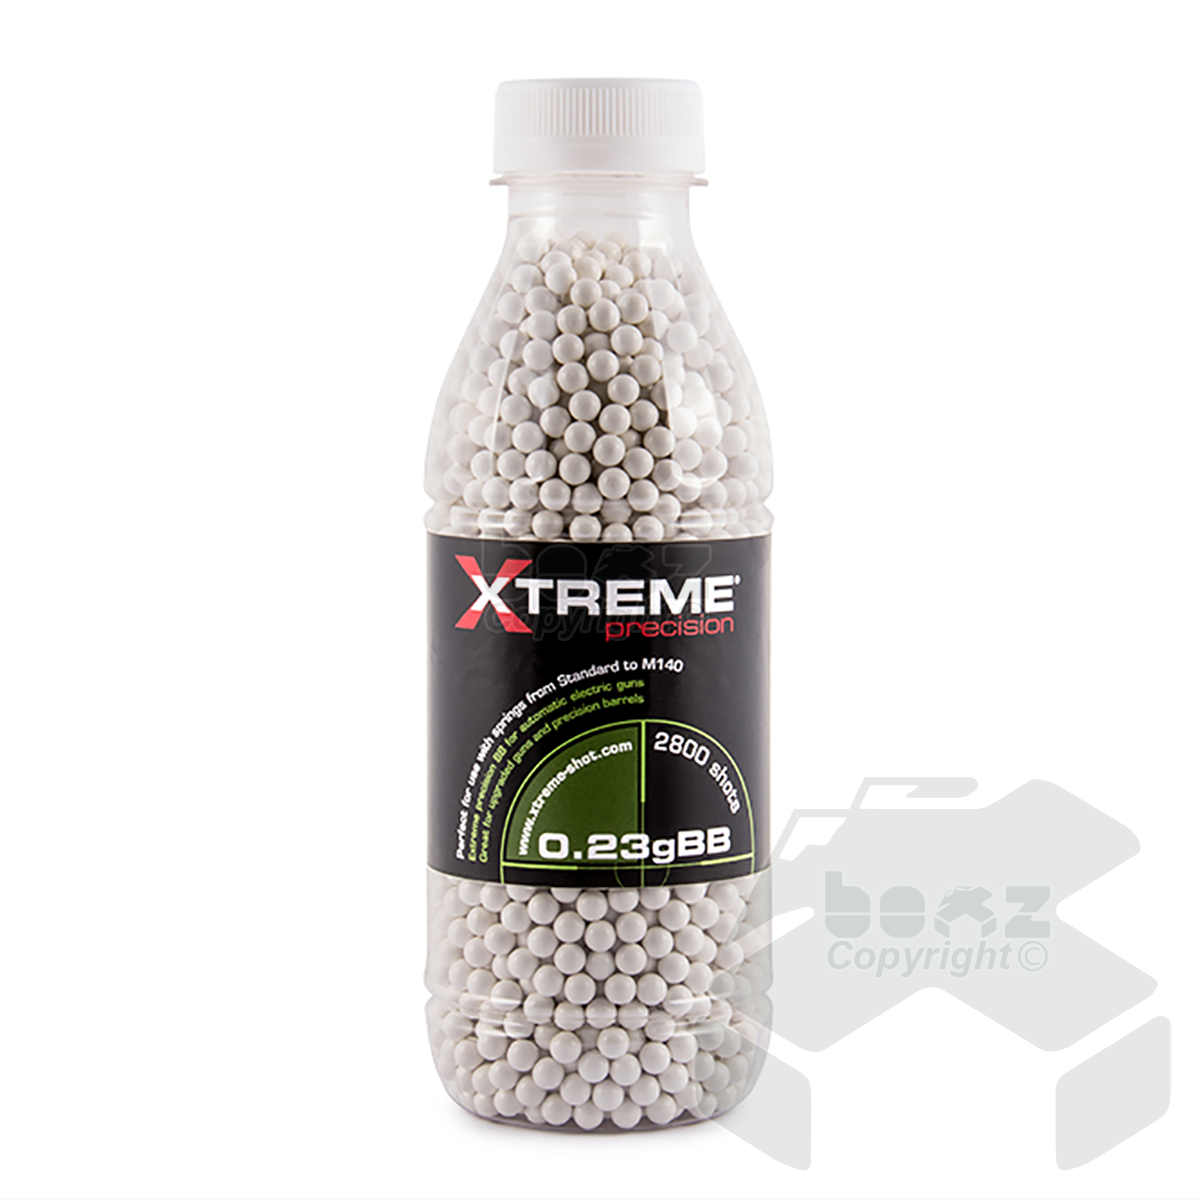 Xtreme Precision 0.23g BBs White 2800 bottle